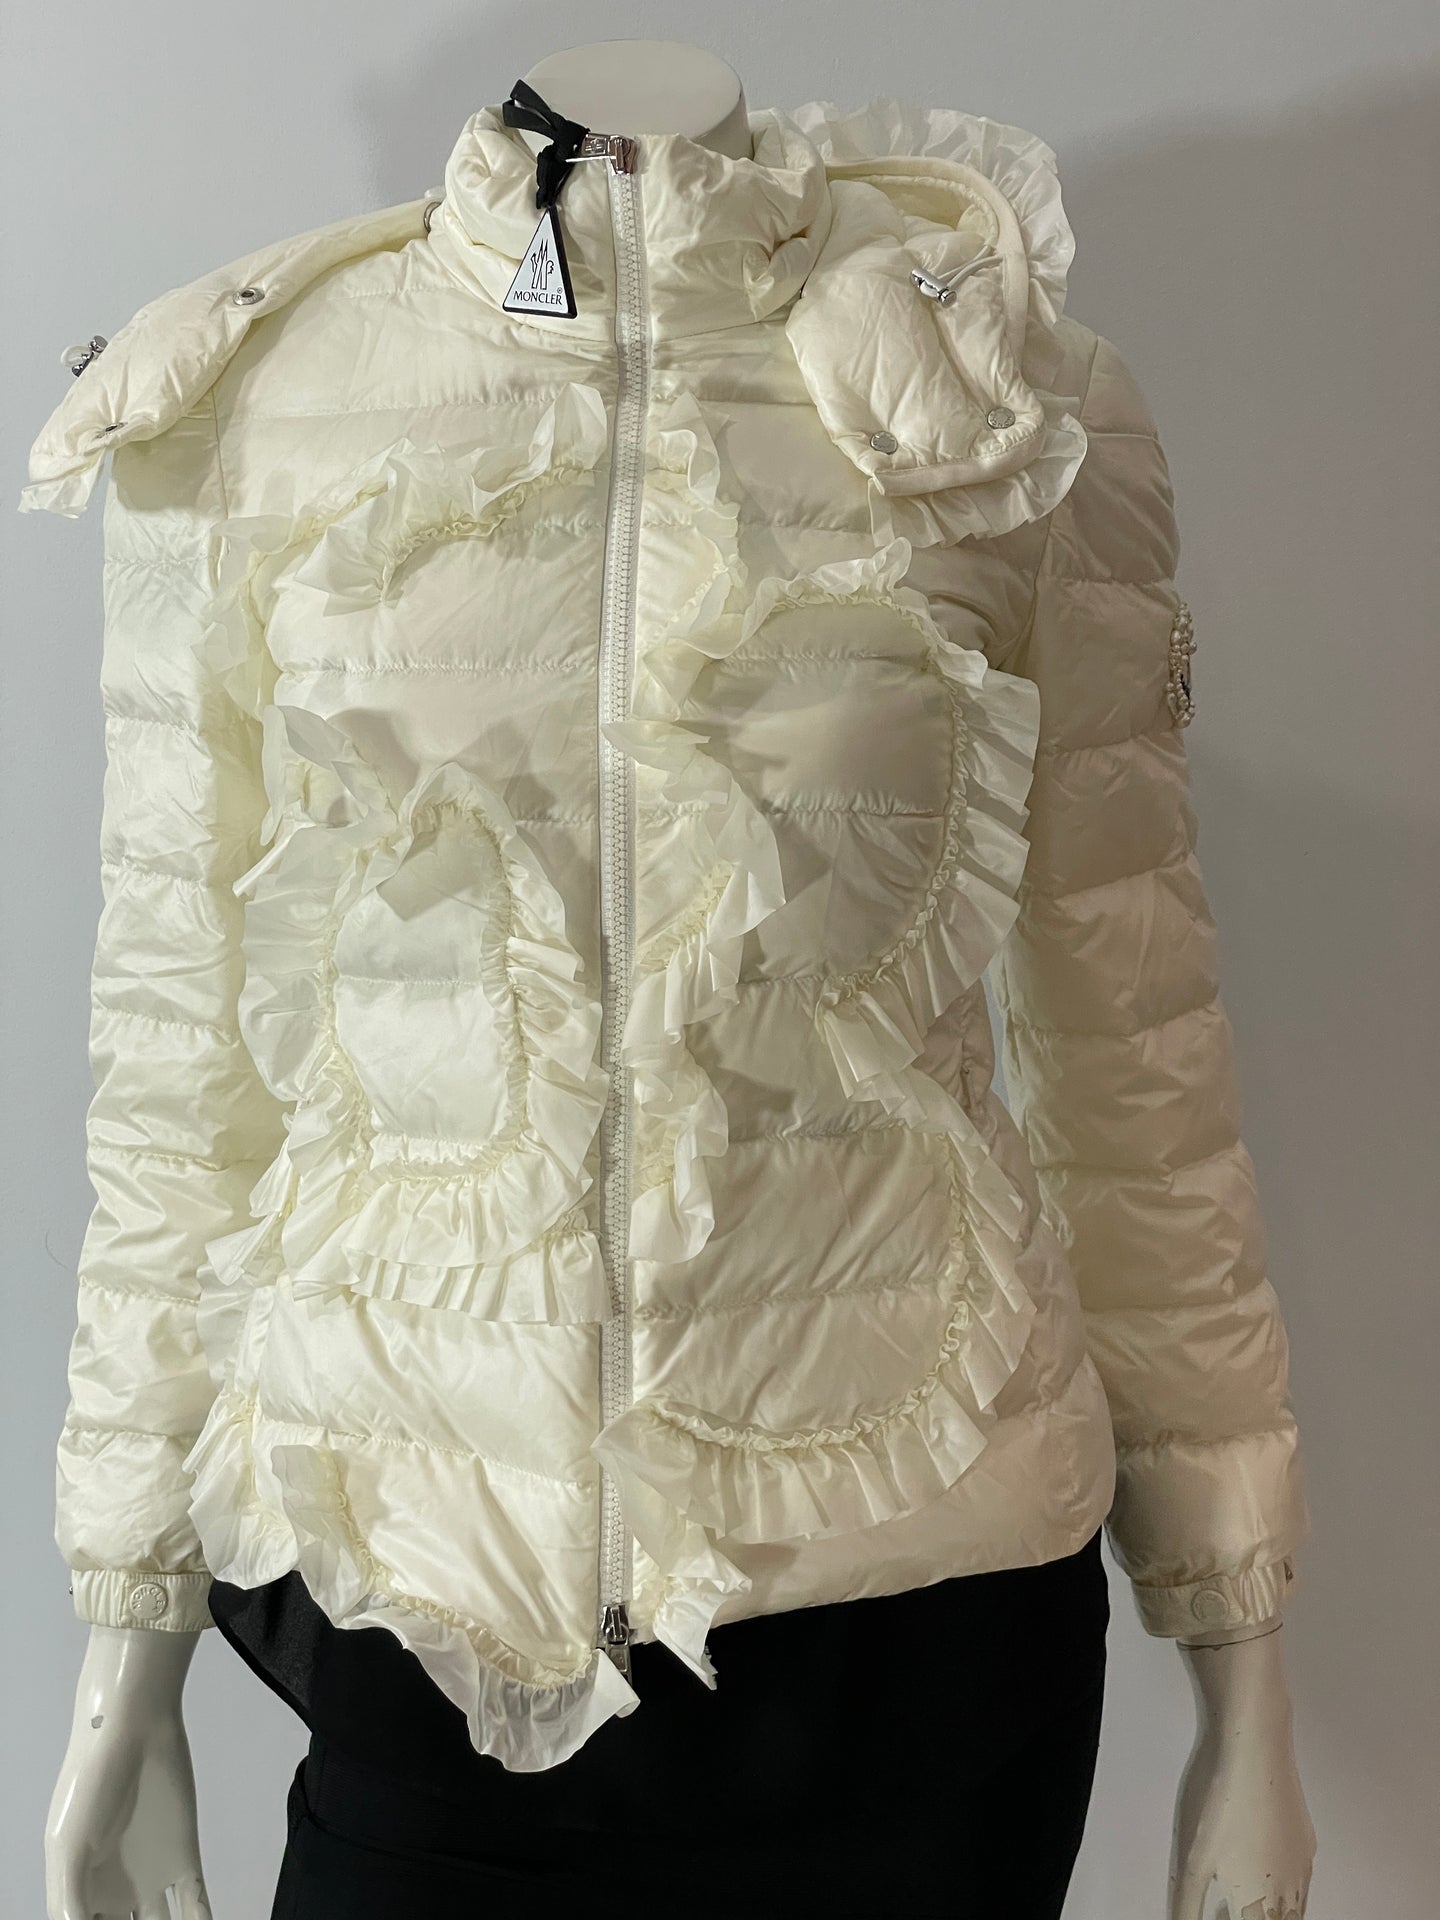 Moncler Genius X Simone Rocha White Ruffled Hooded Jacket